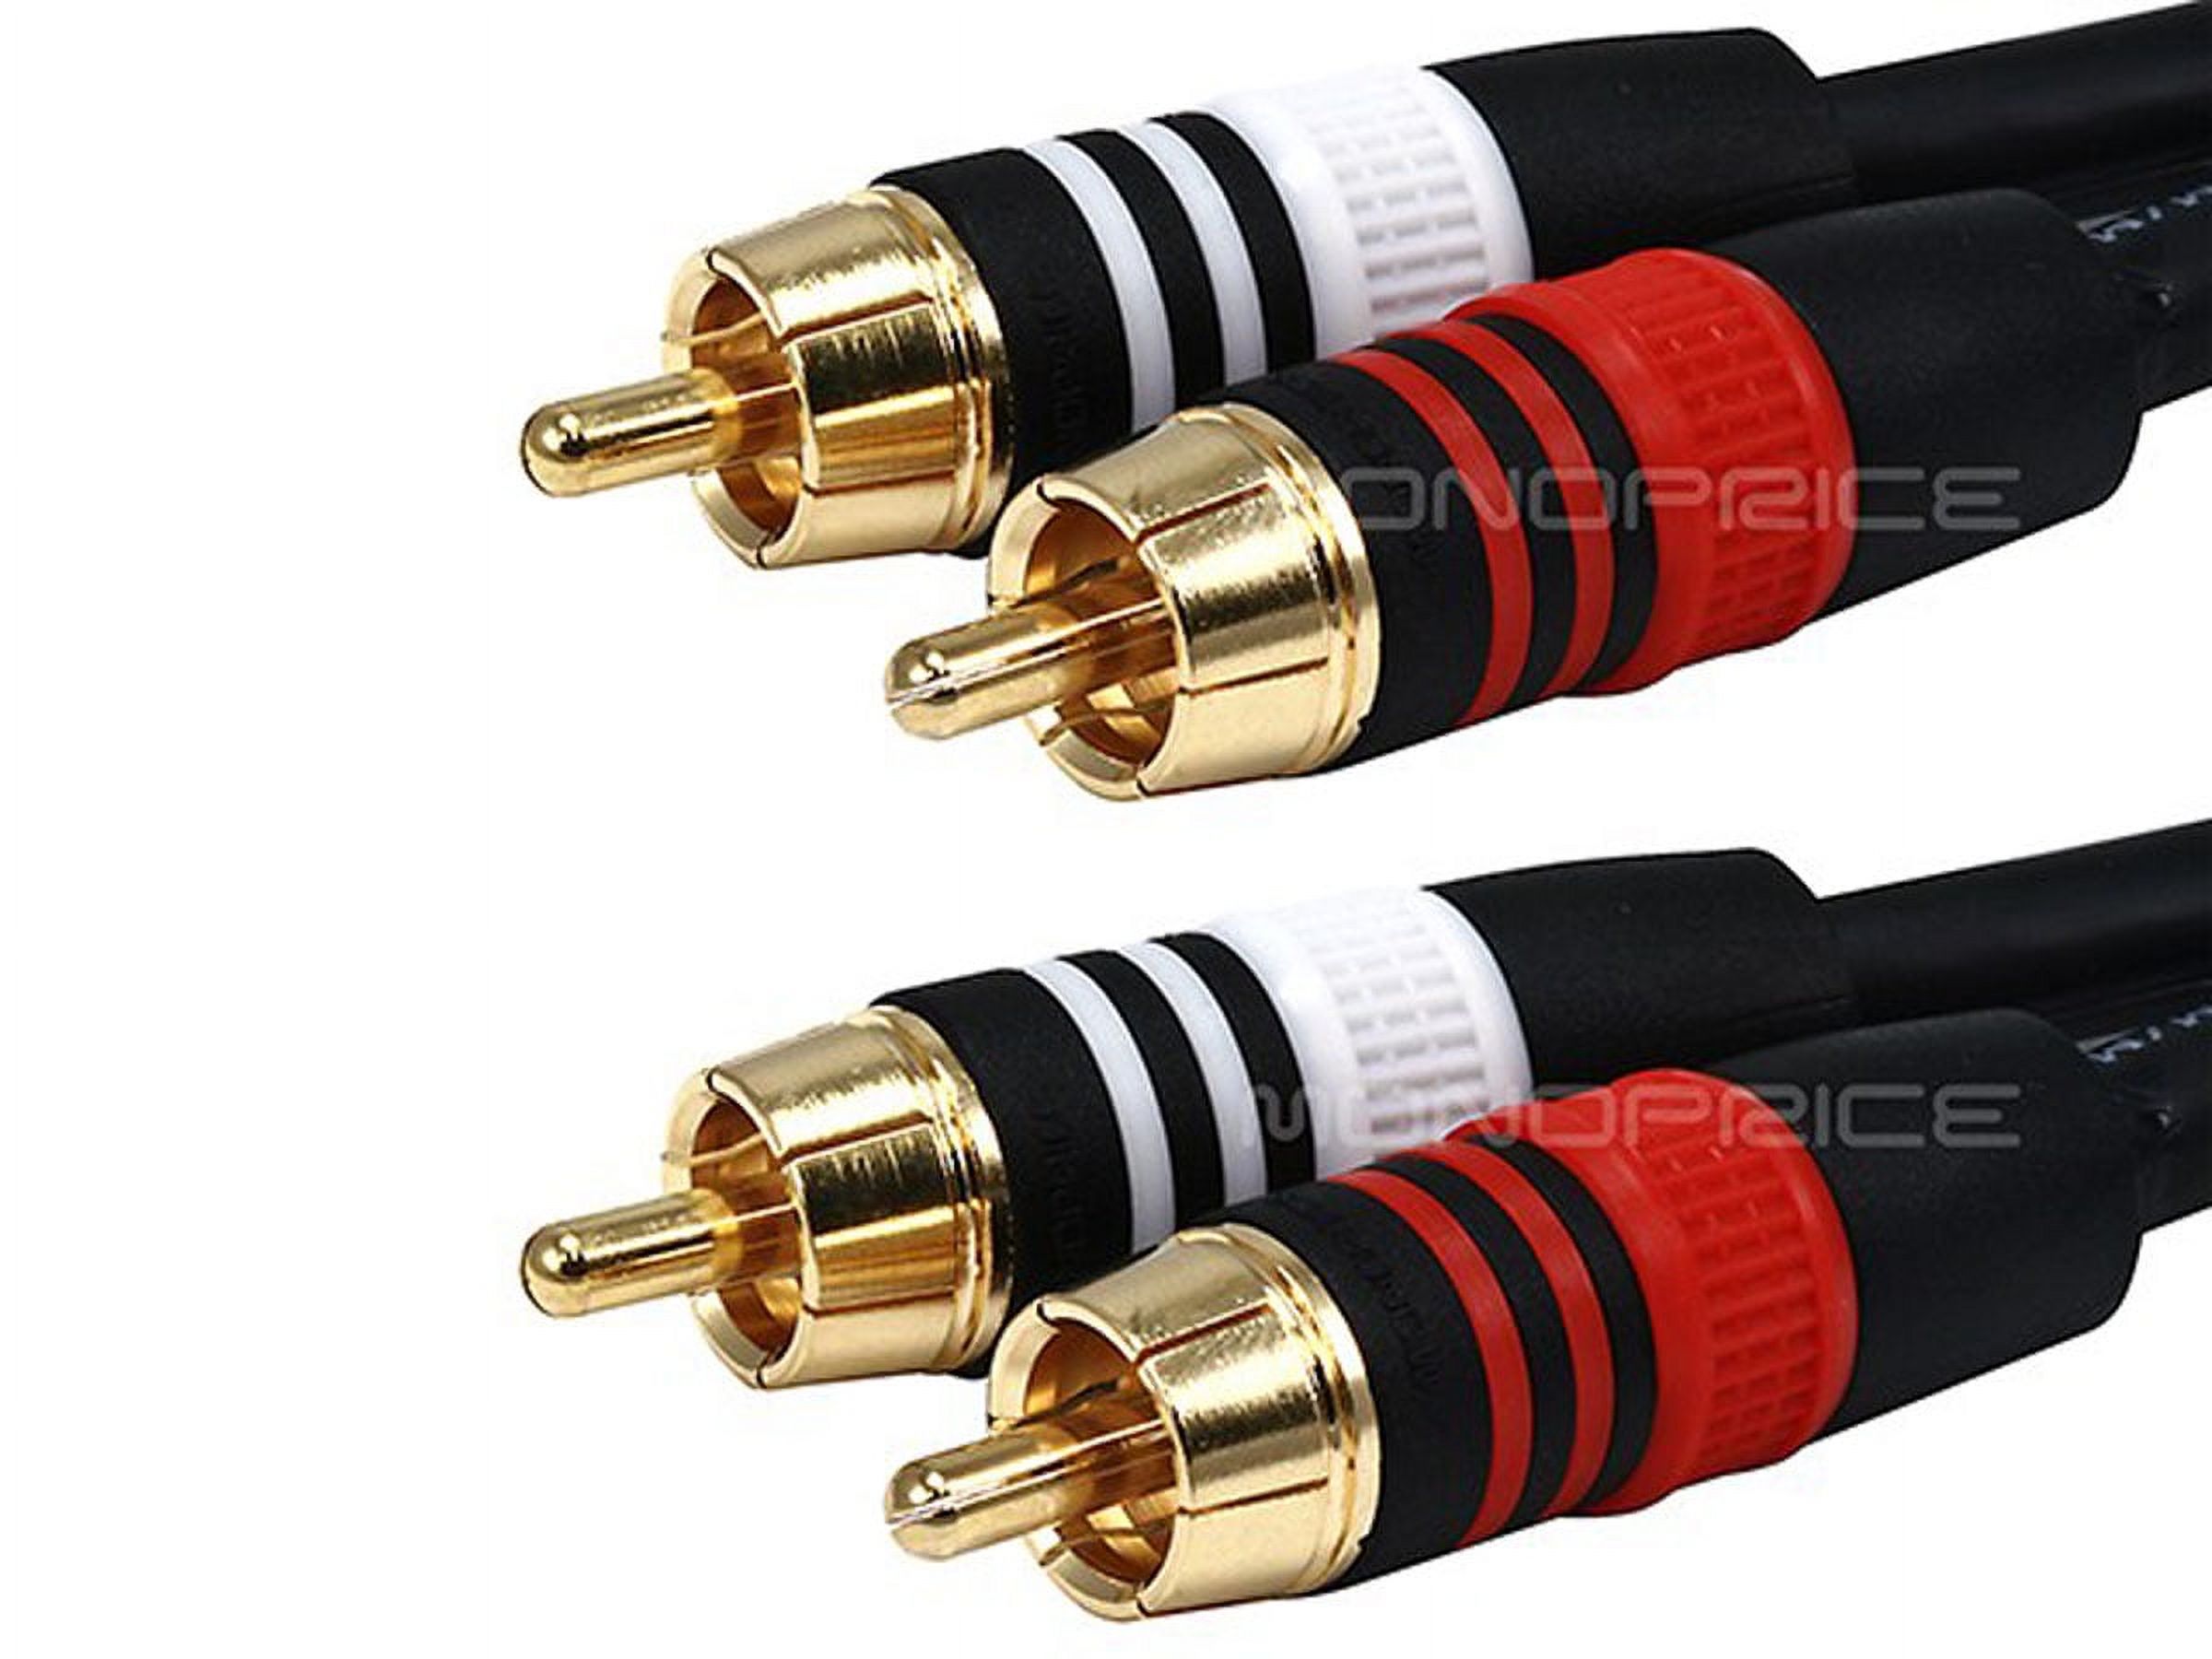 Monoprice Premium RCA Cable - 10 Feet - Black | 2 RCA Plug to 2 RCA Plug, Male to Male, 22AWG - image 2 of 2